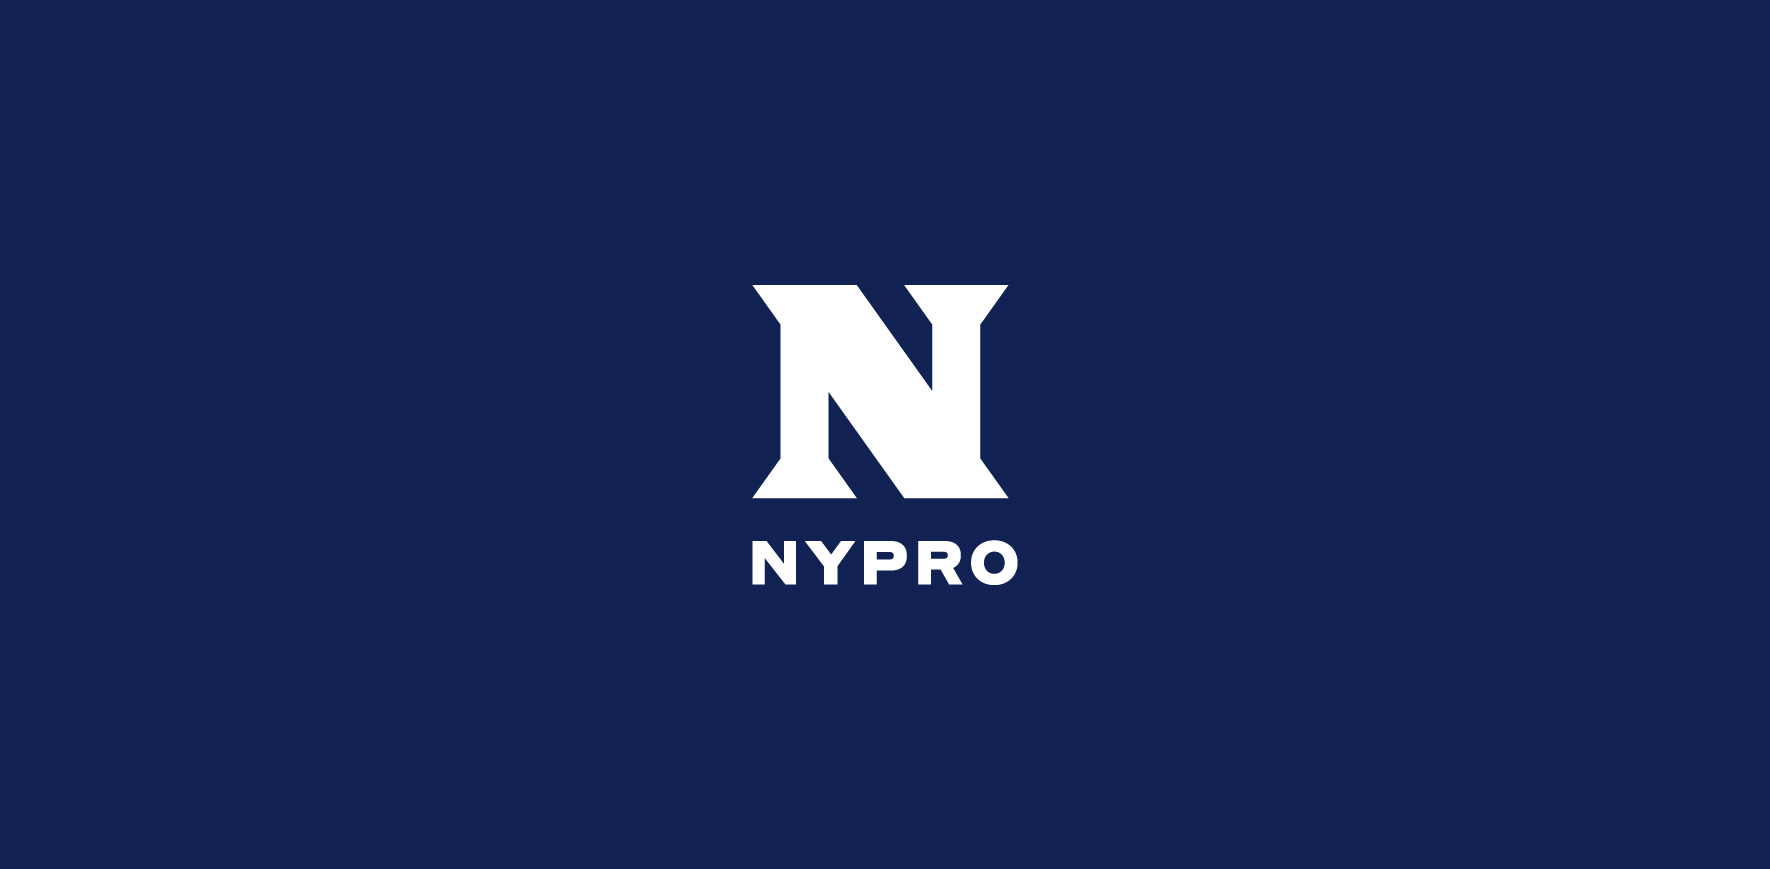 Nypro Branding